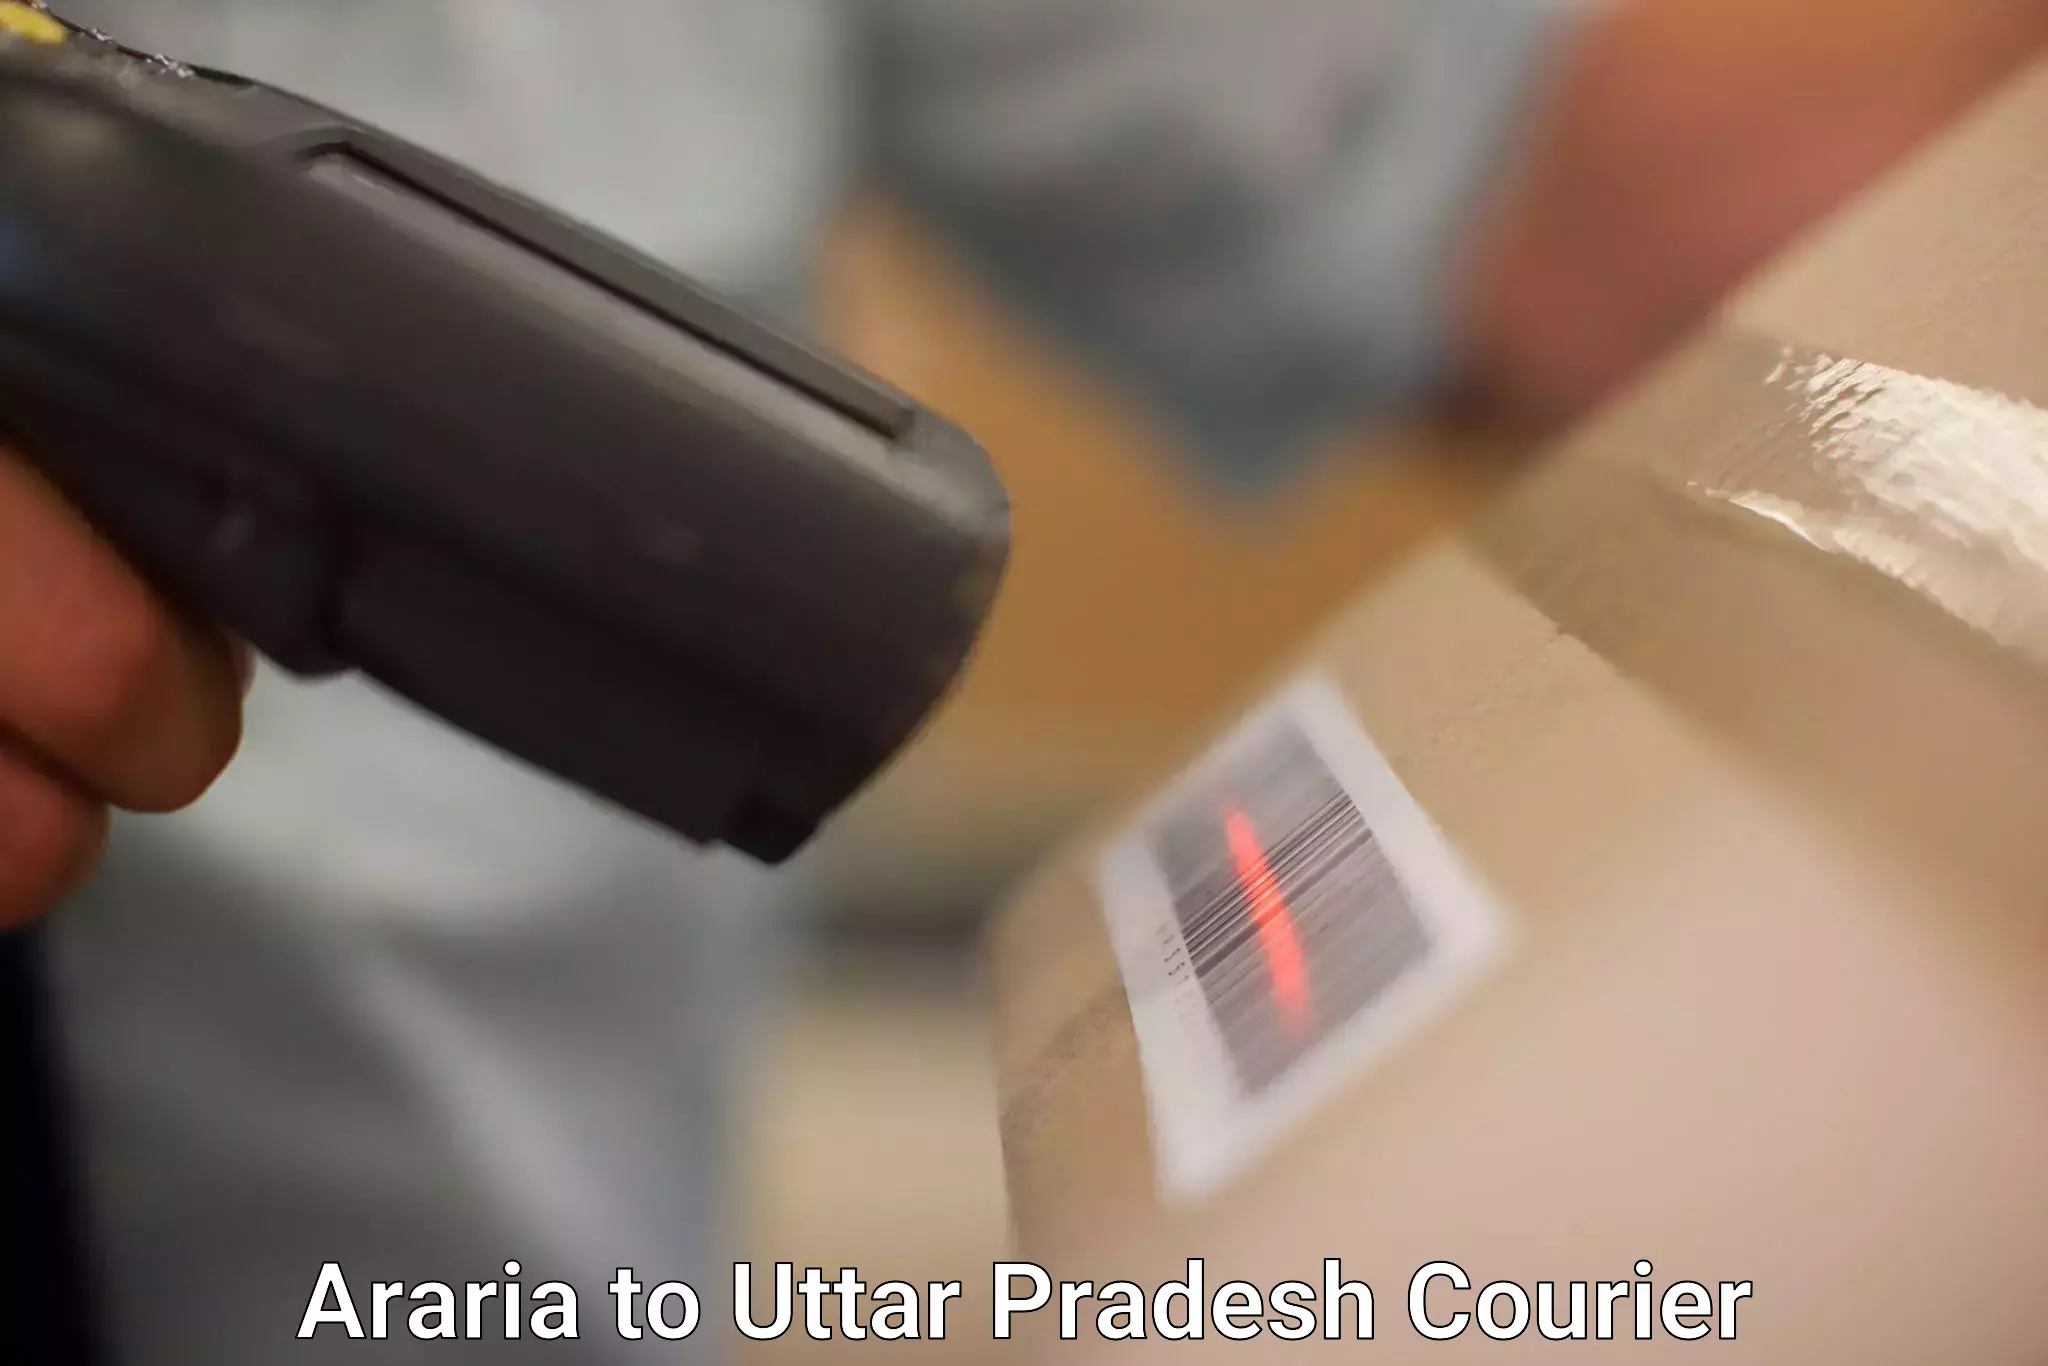 Flexible delivery scheduling Araria to Vrindavan